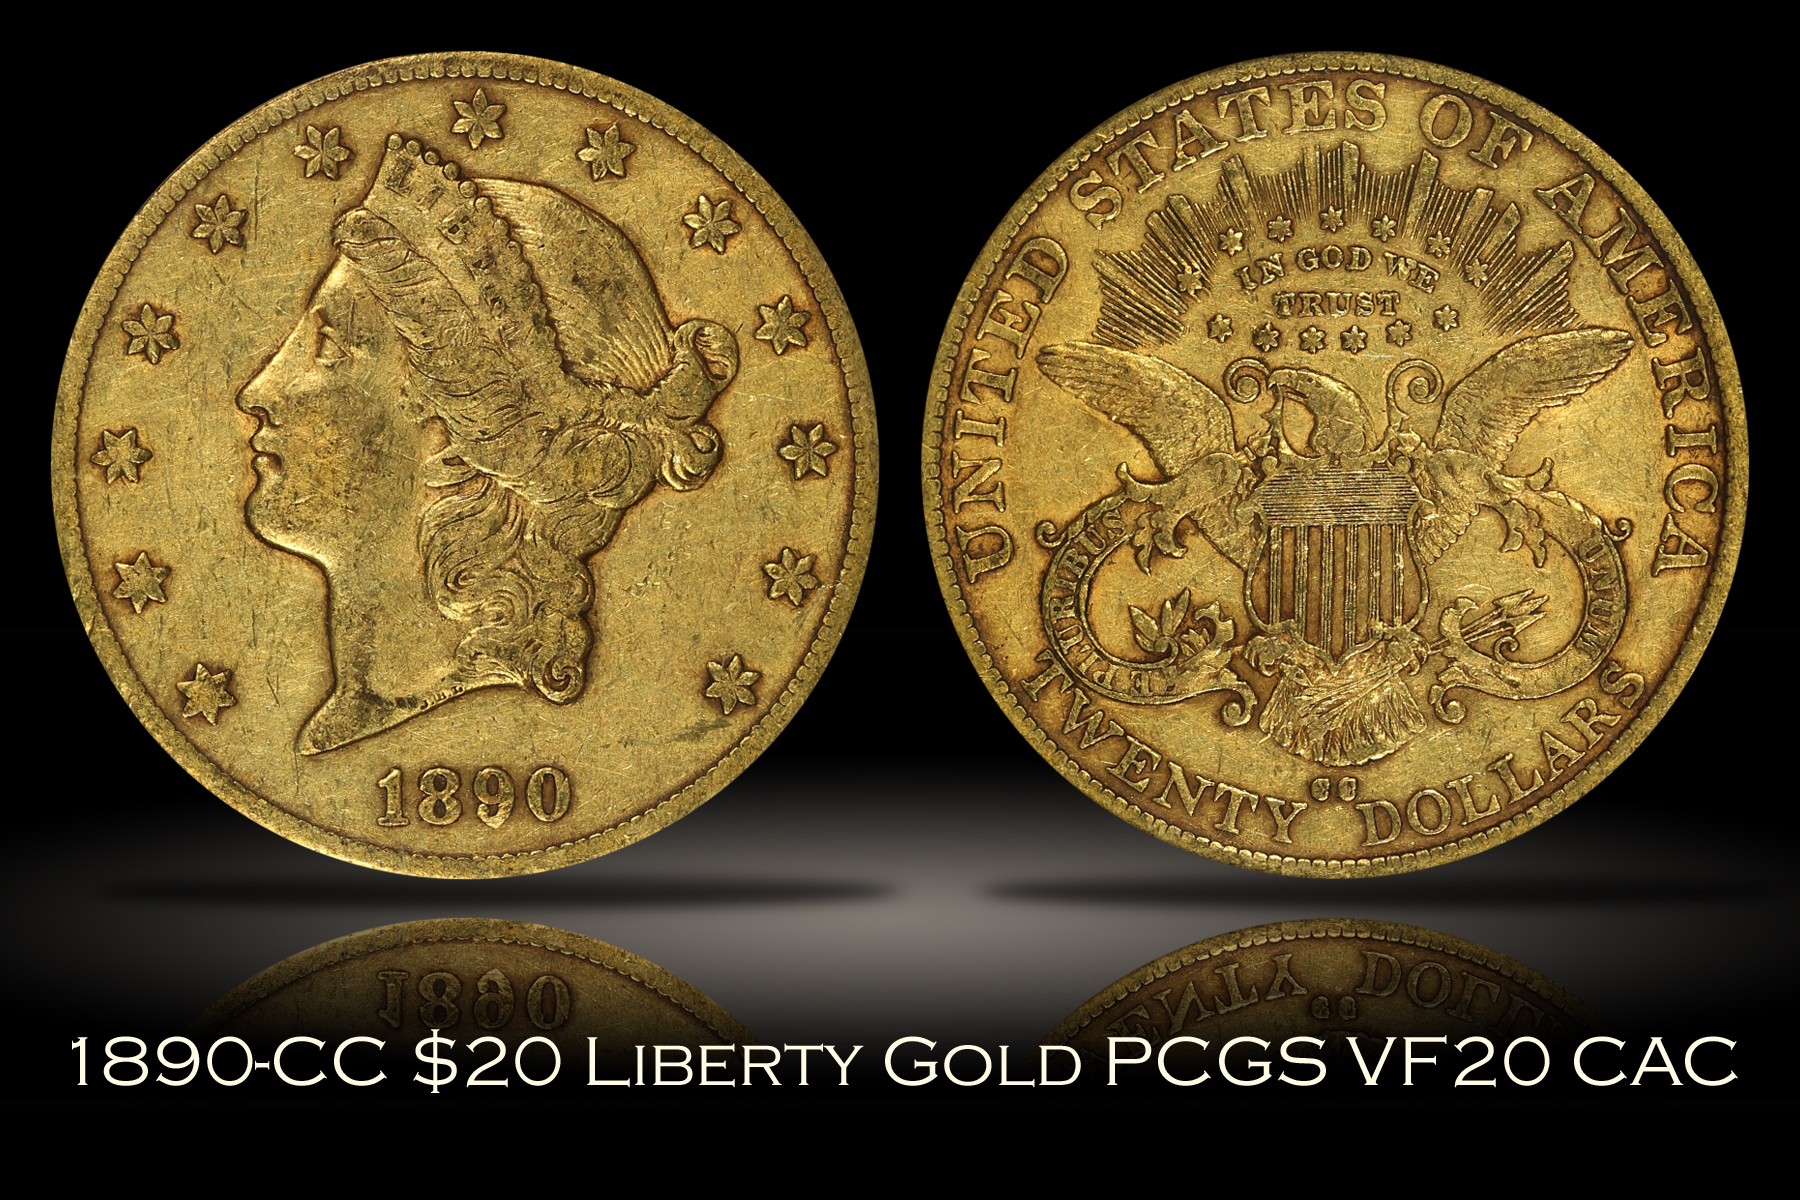 1890-CC $20 Liberty Gold PCGS VF20 CAC